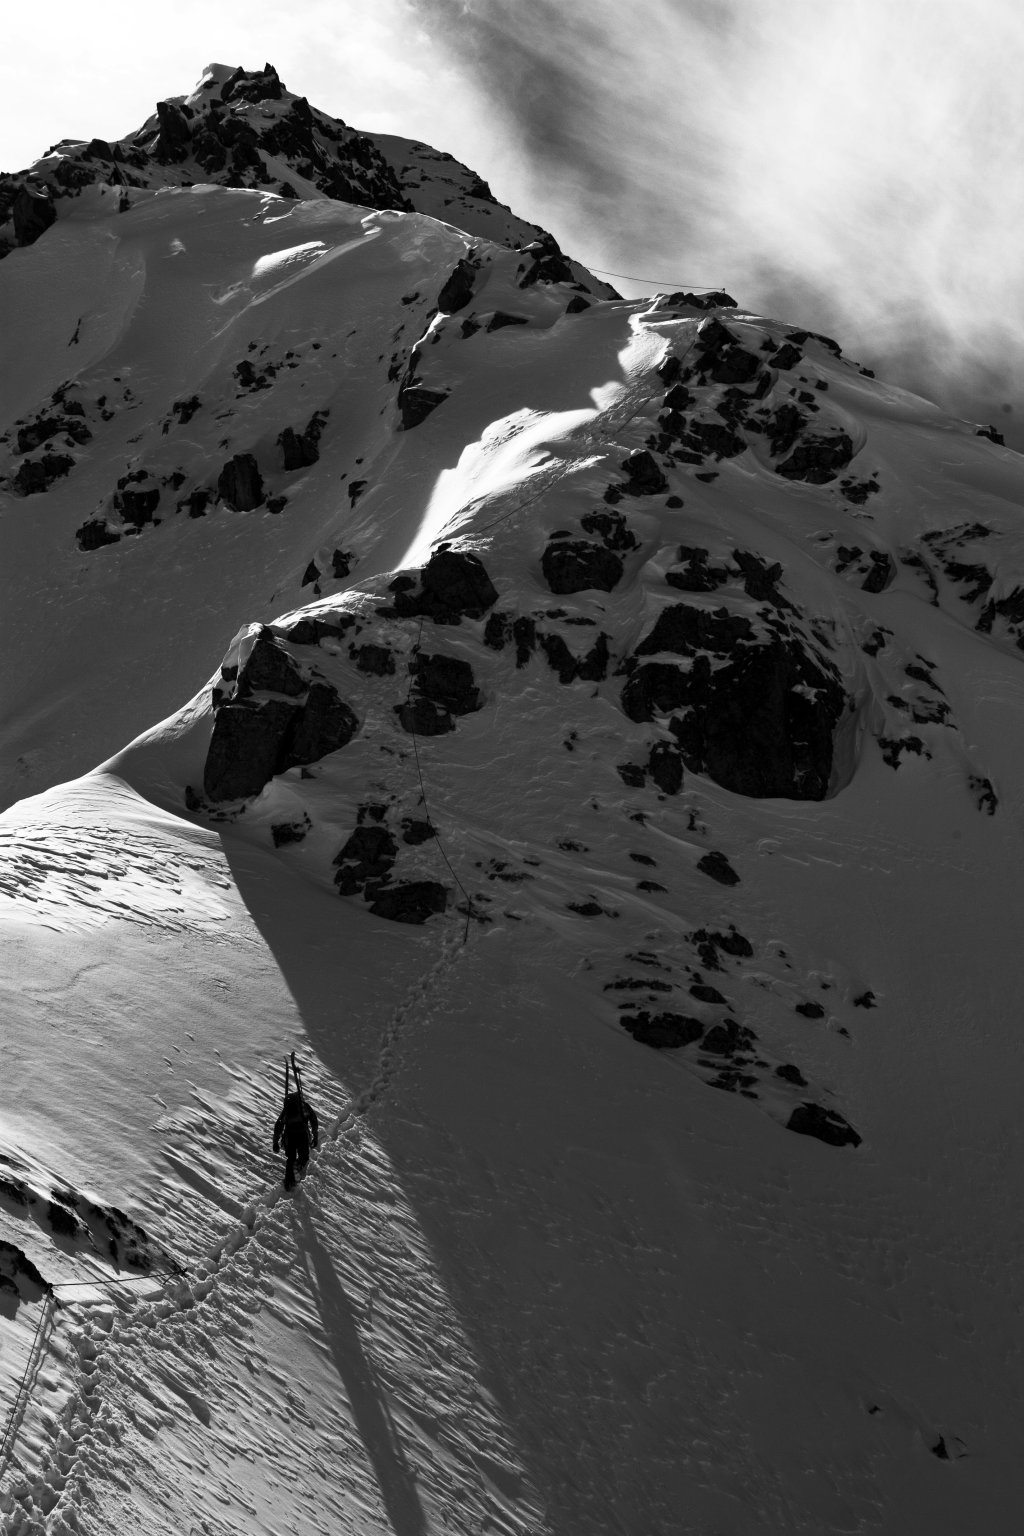 Part of the ascent runs along a snow ridge